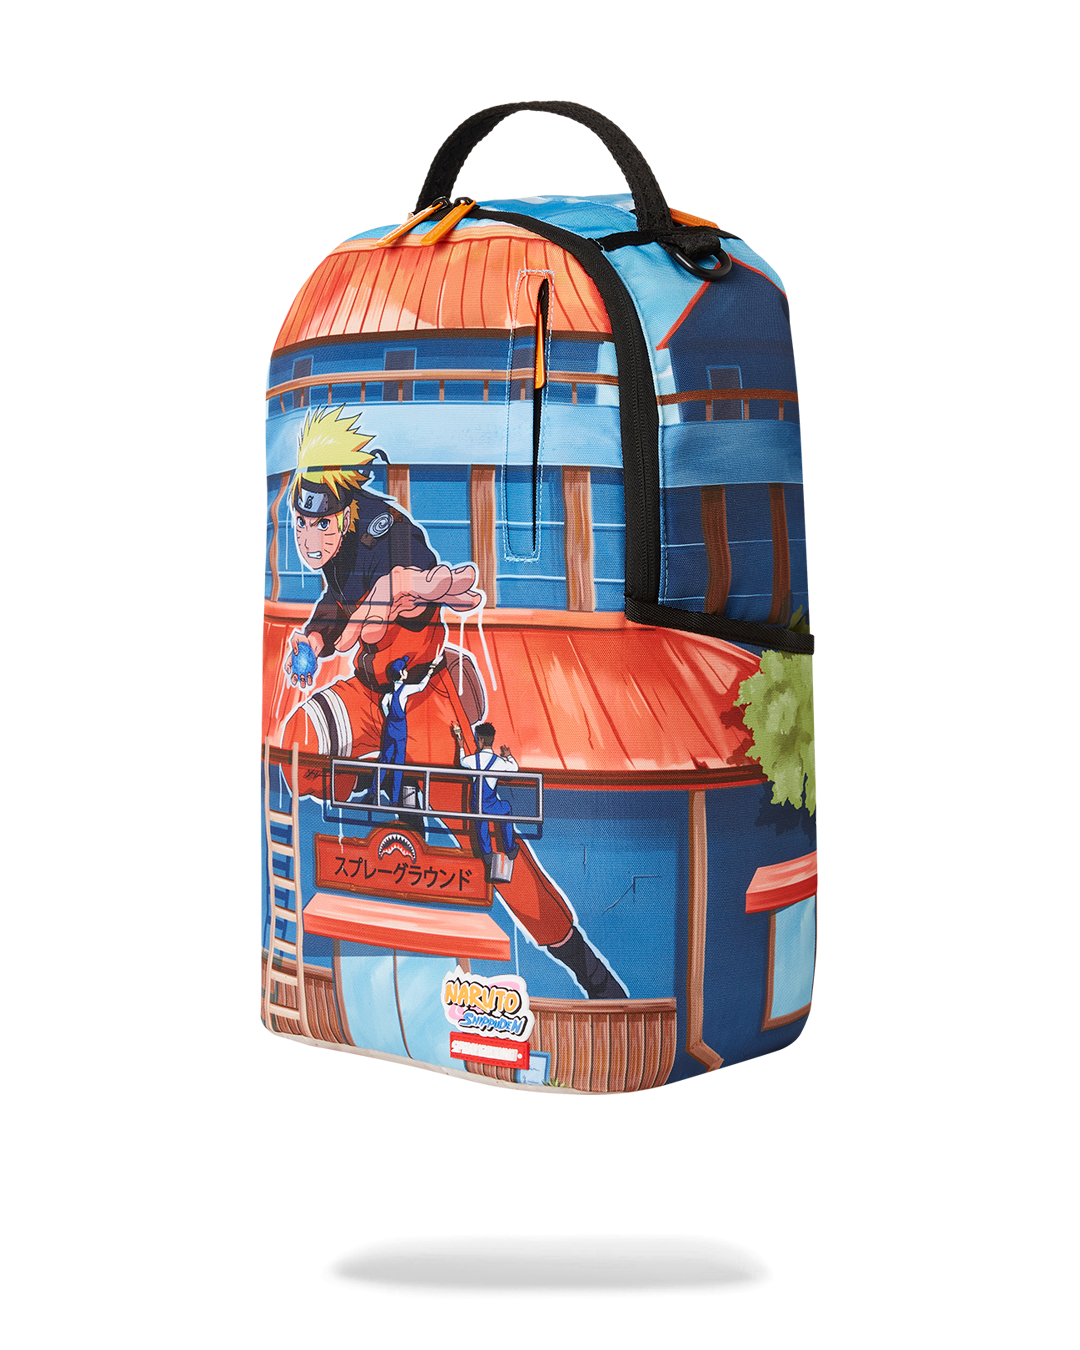 Sprayground NARUTO SHIPPUDEN RAMEN (DLXR) Backpack School Bag